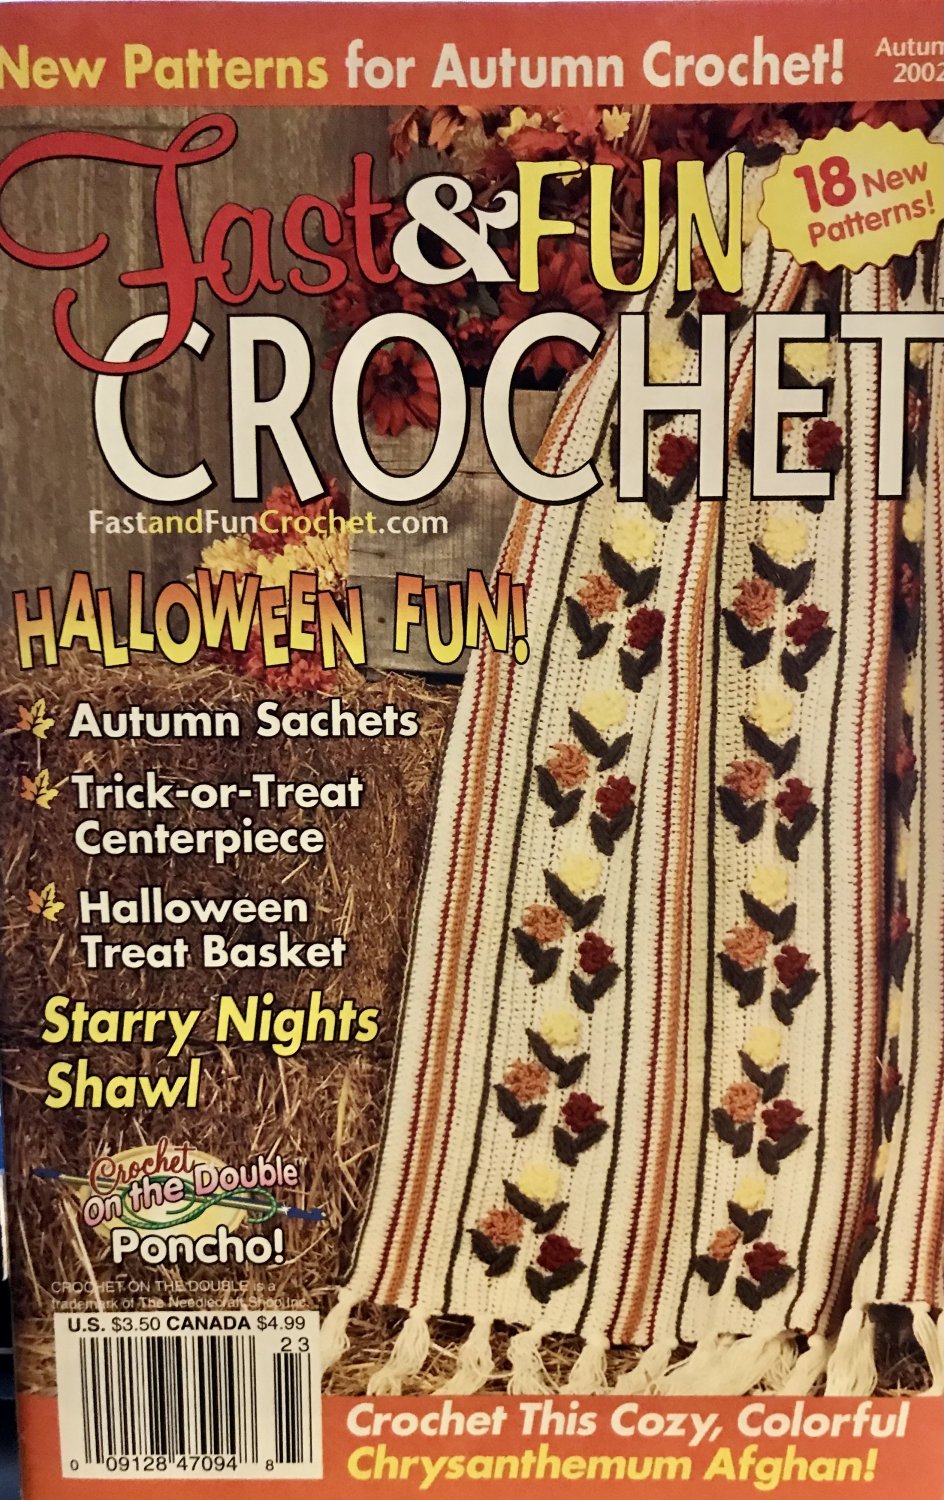 Fast & Fun Crochet  Issue Autumn 2002 Halloween Fun, treat baskets, shawl, afghan